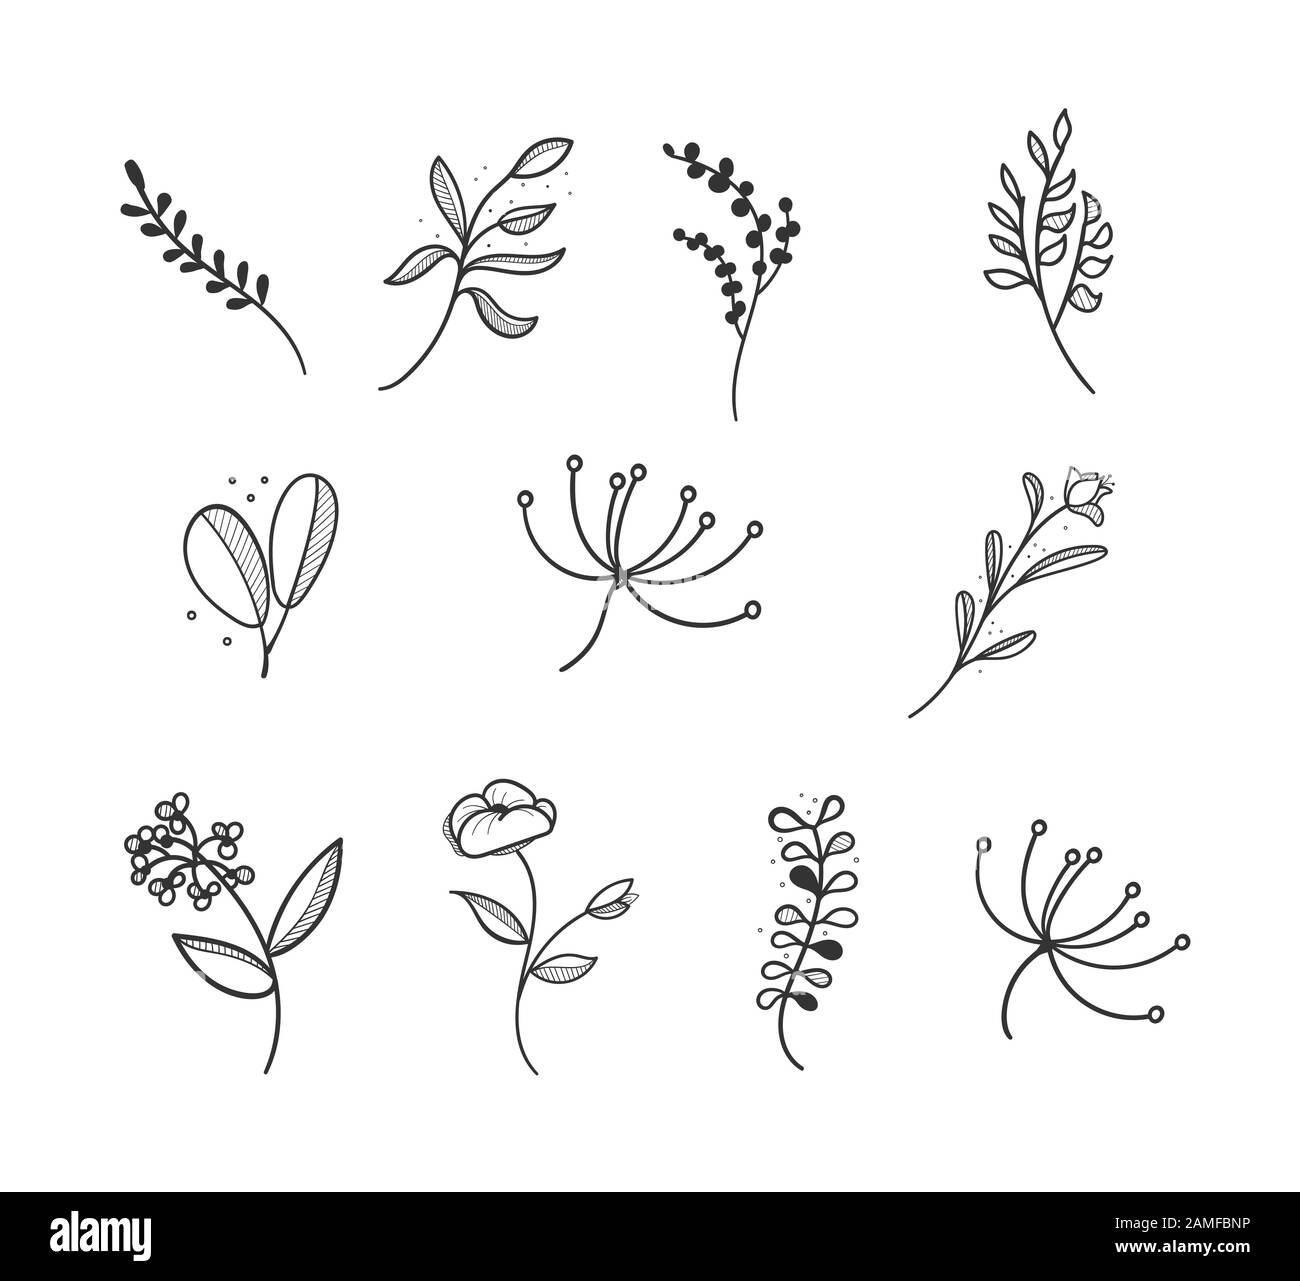 Botanical logo outline drawing vecctor in set Stock Vector Image & Art ...